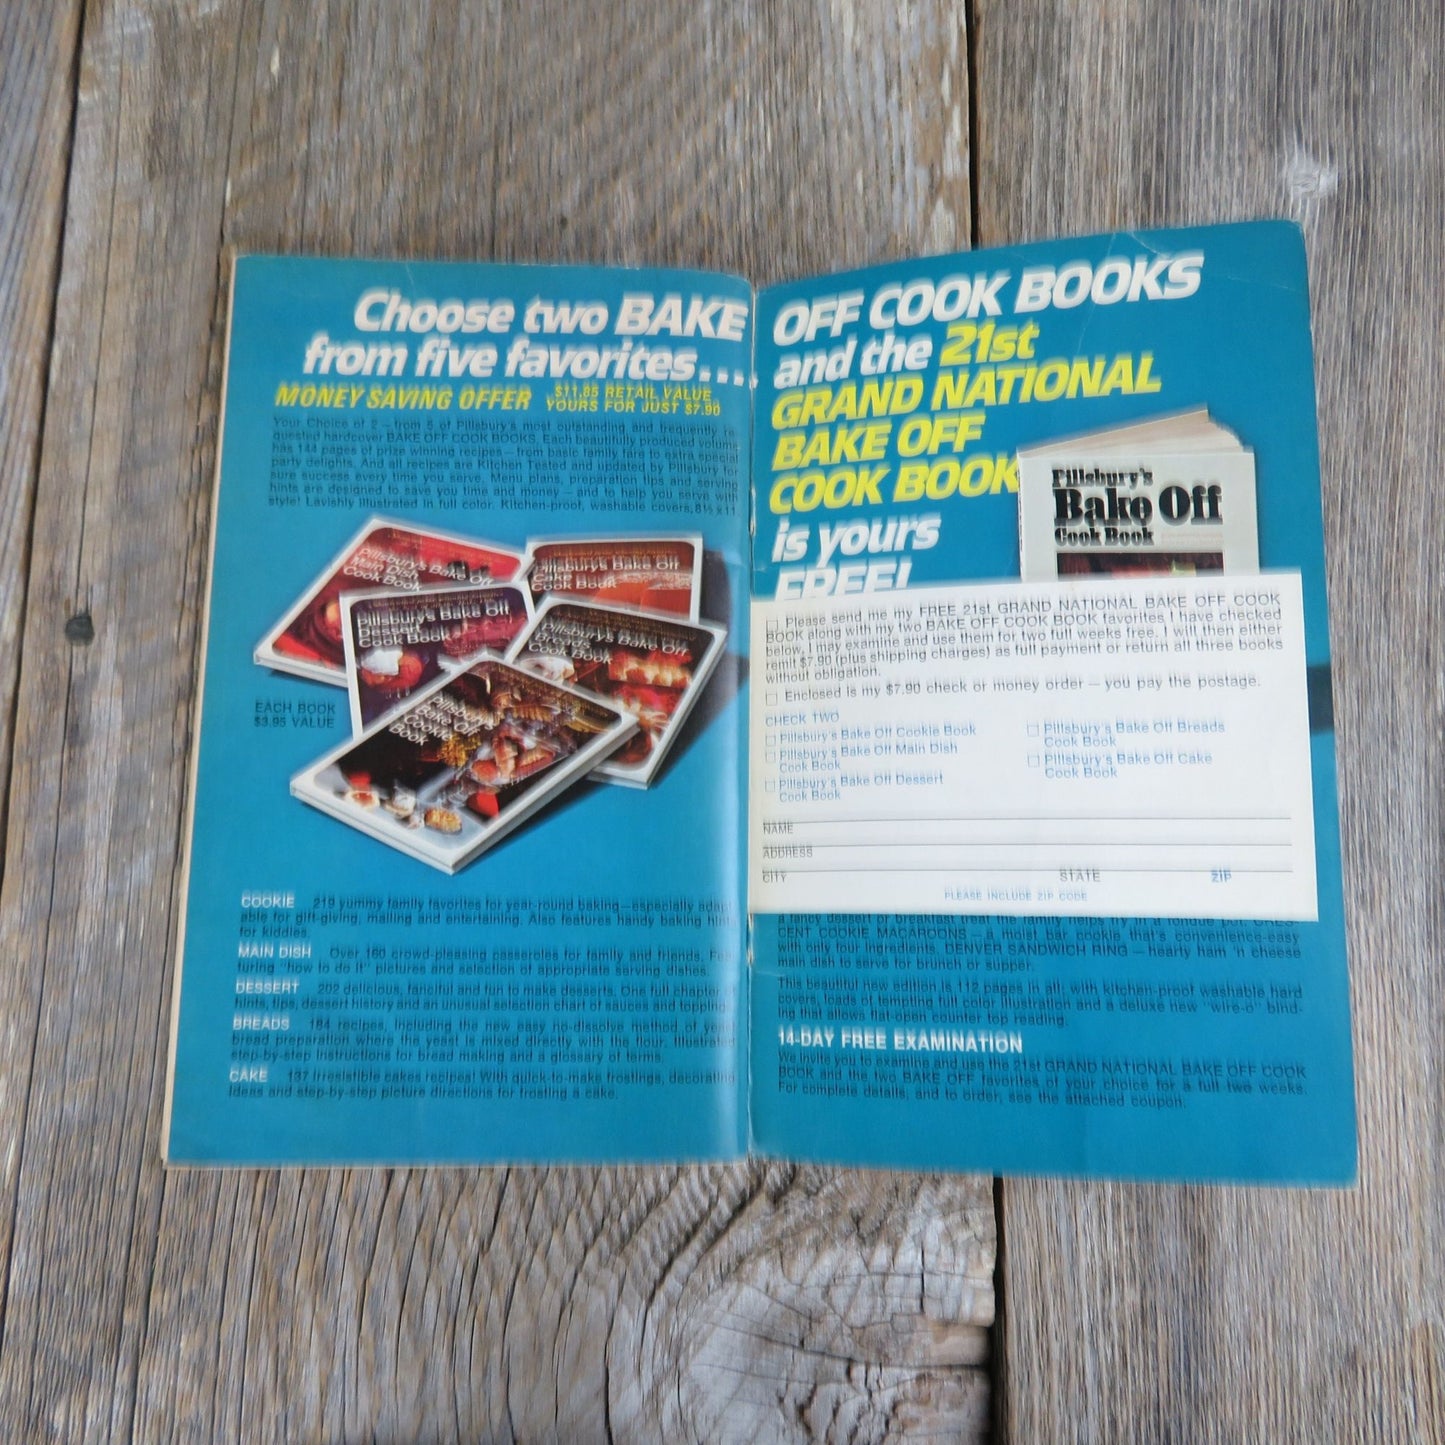 Pillsbury's Money Saving Meals Cookbook 1970 Recipes Menus Low Cost Food Paperback Booklet Grocery Store Vintage